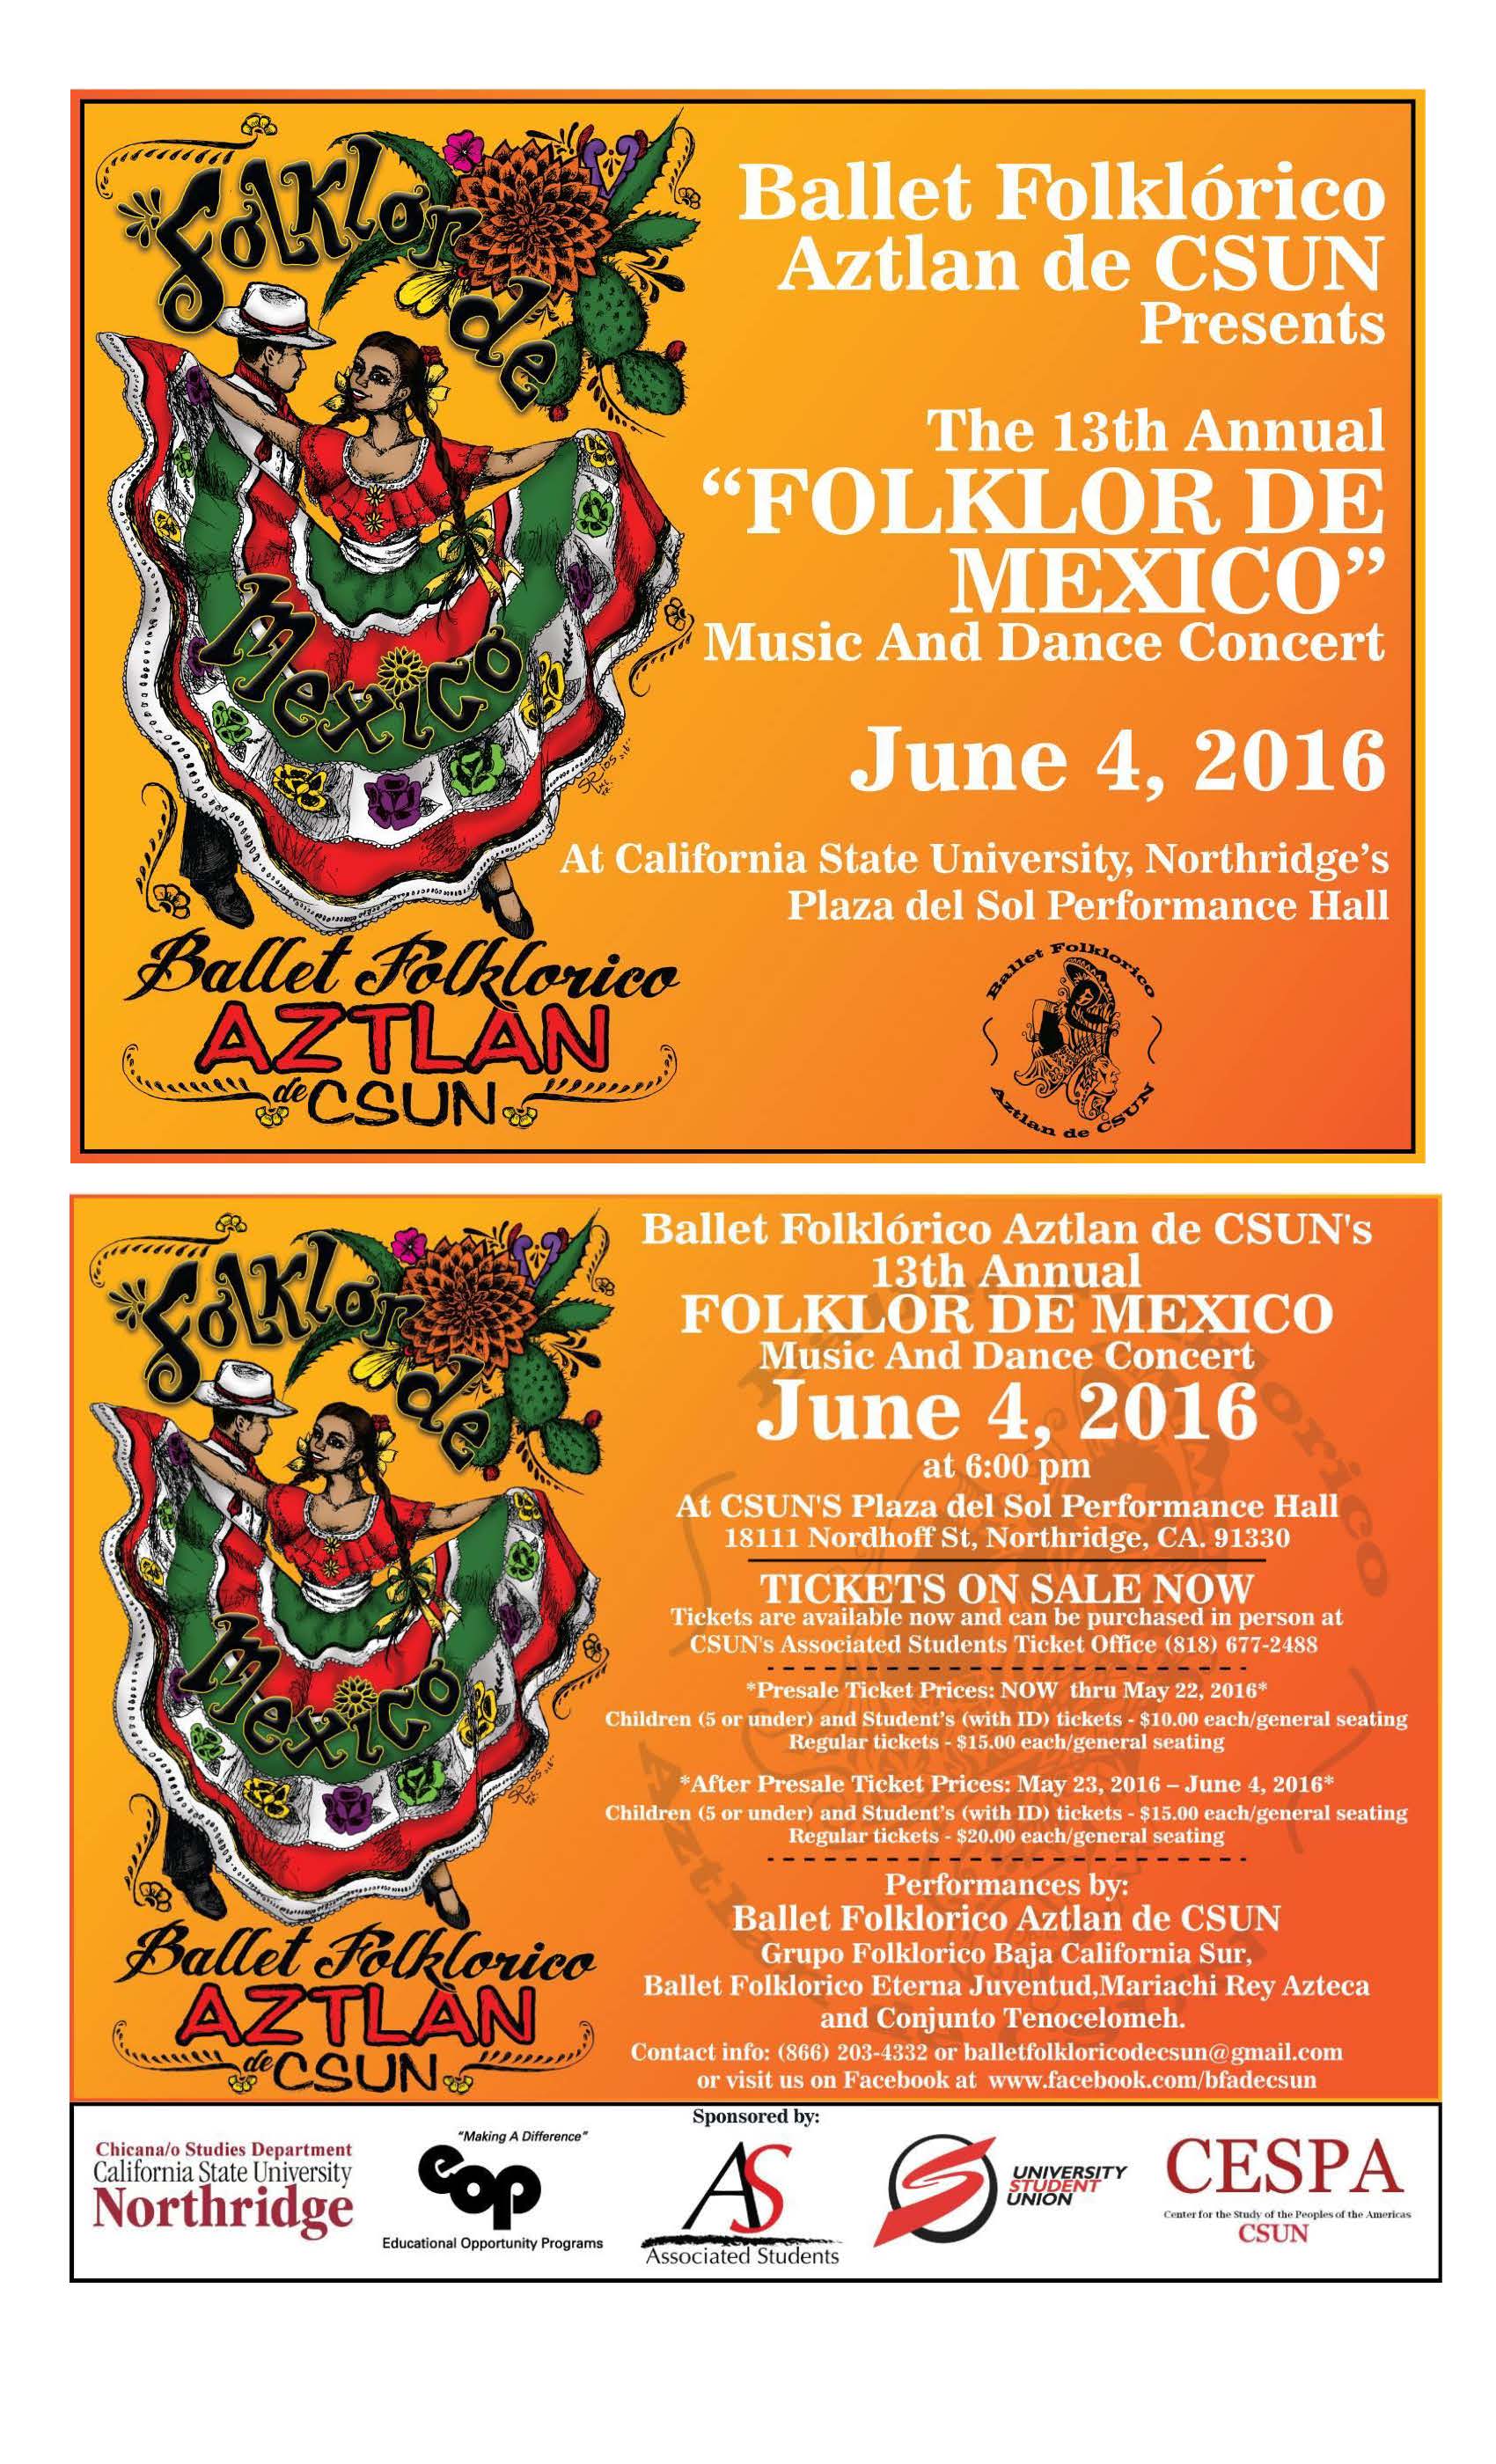 "Folklor de Mexico" Music and Dance Concert